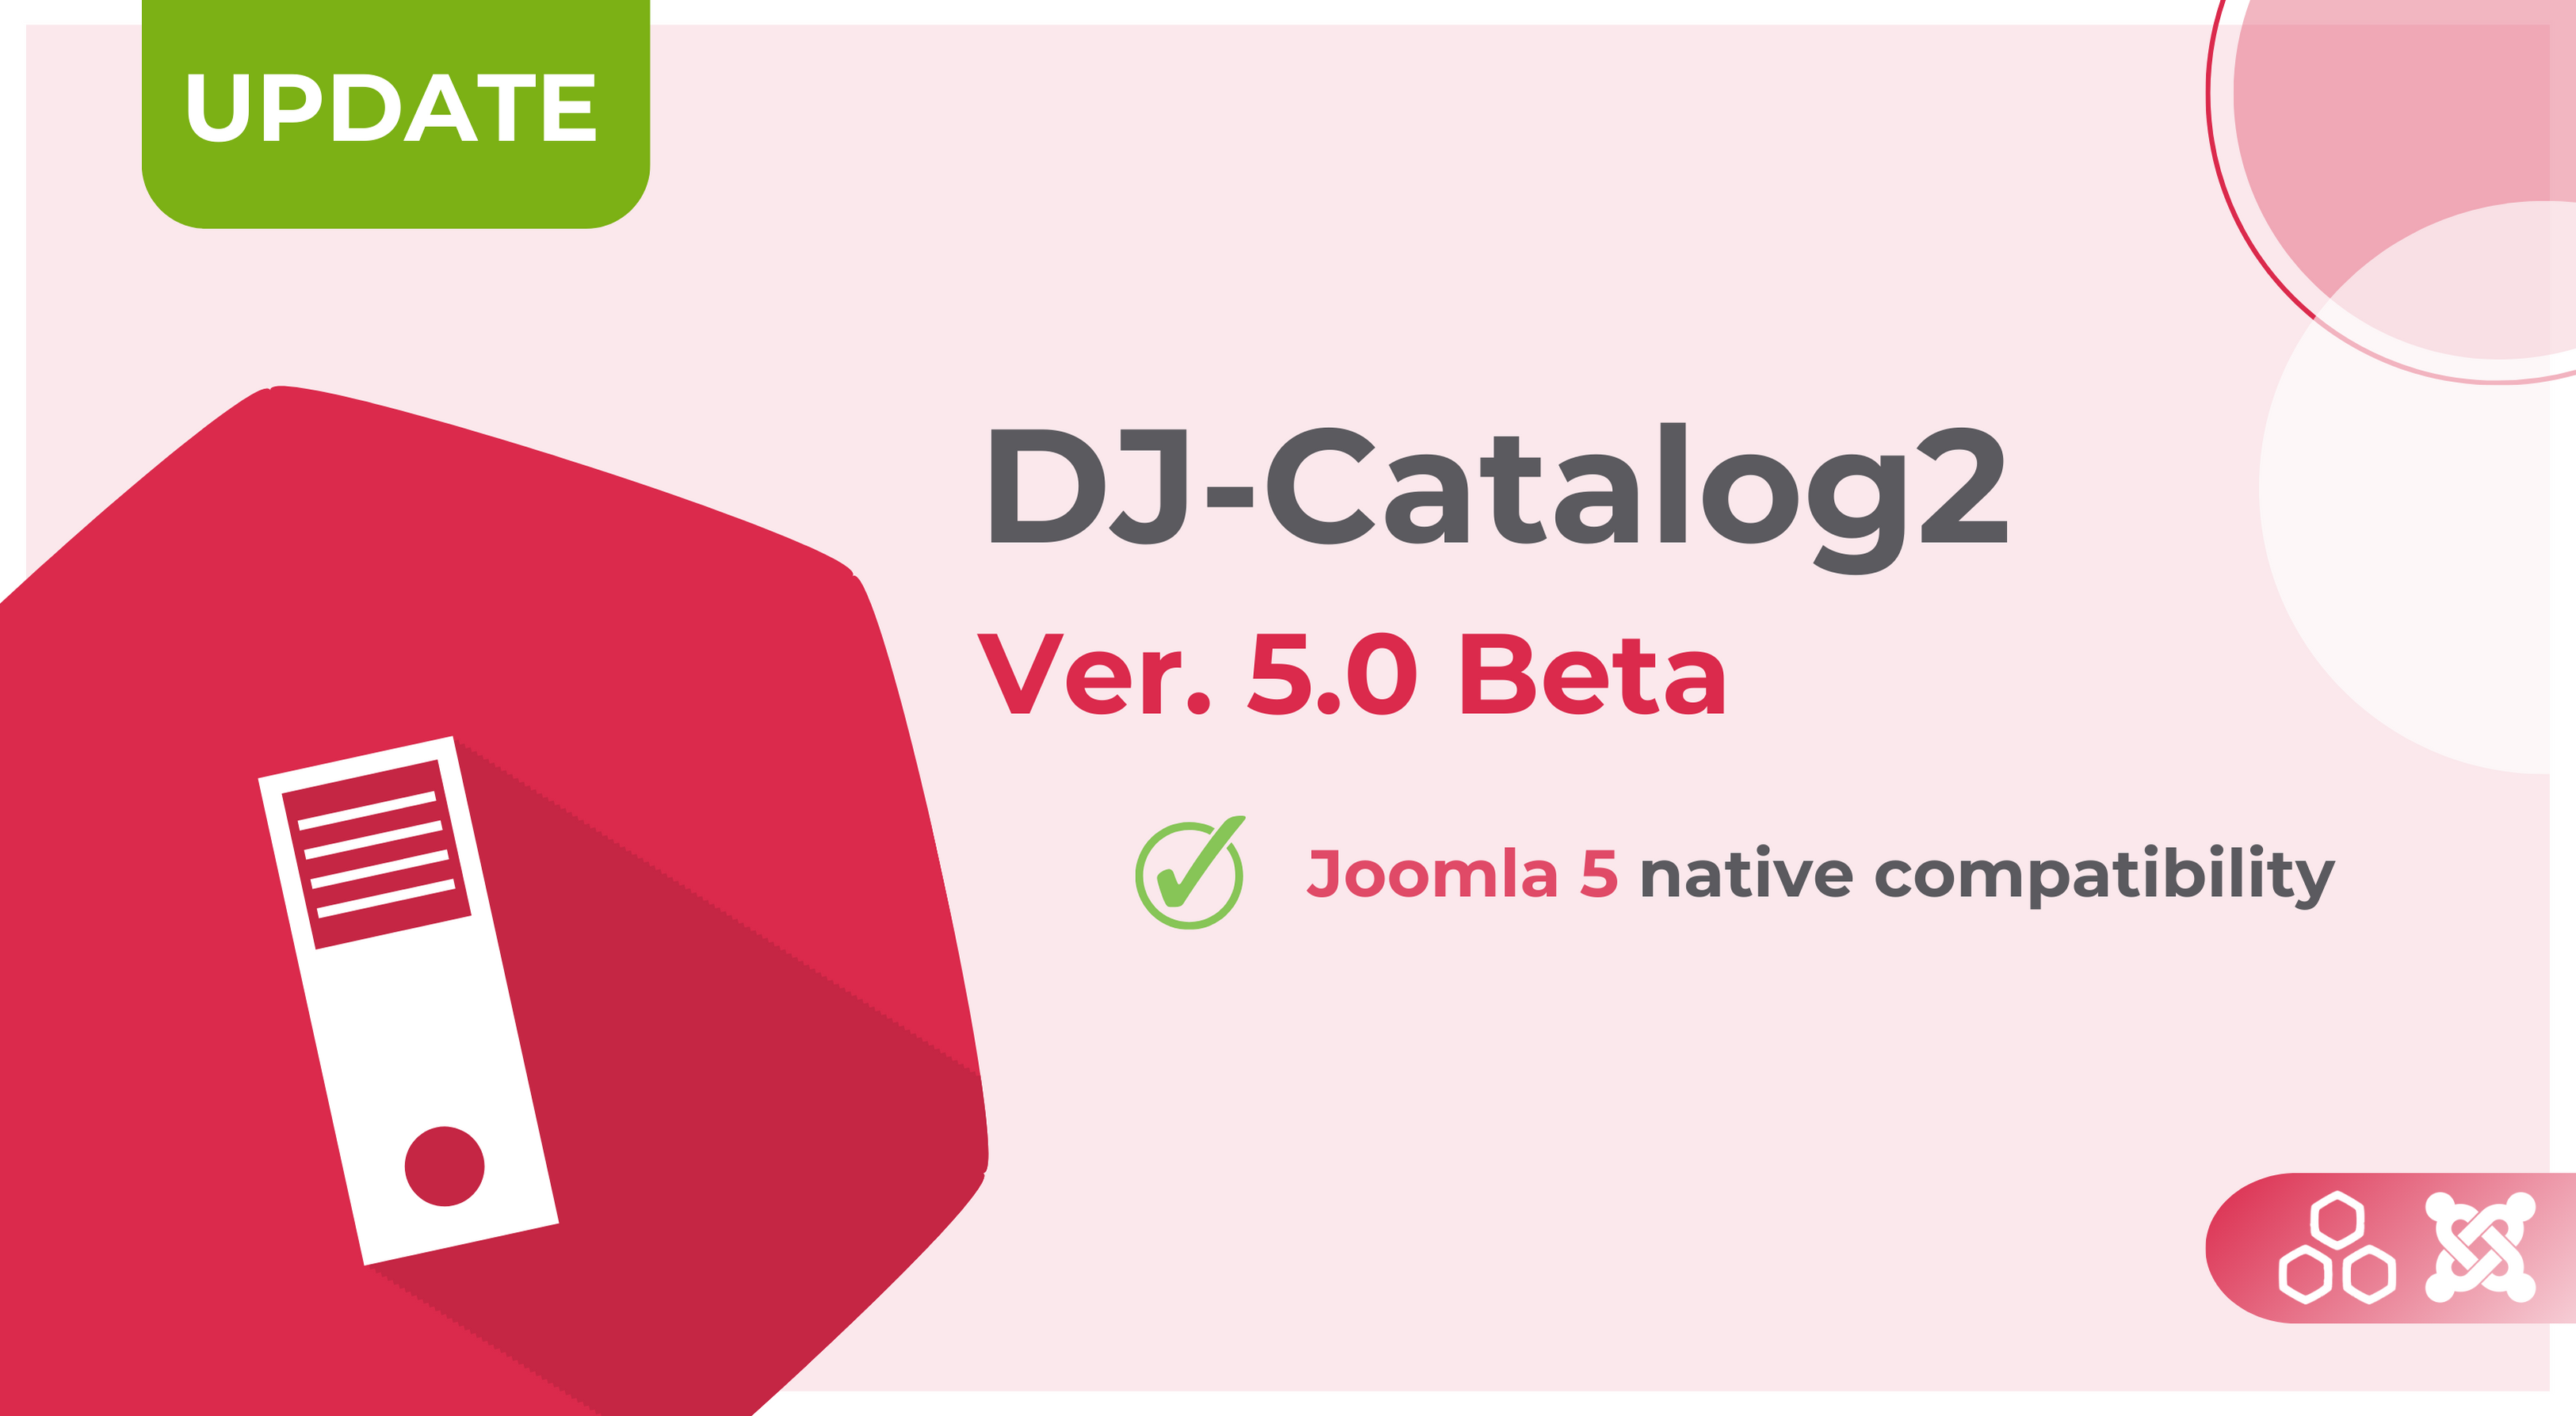 [UPDATE] DJ-Catalog2 ver. 5.0 Beta brings the Joomla 5 native compatibility